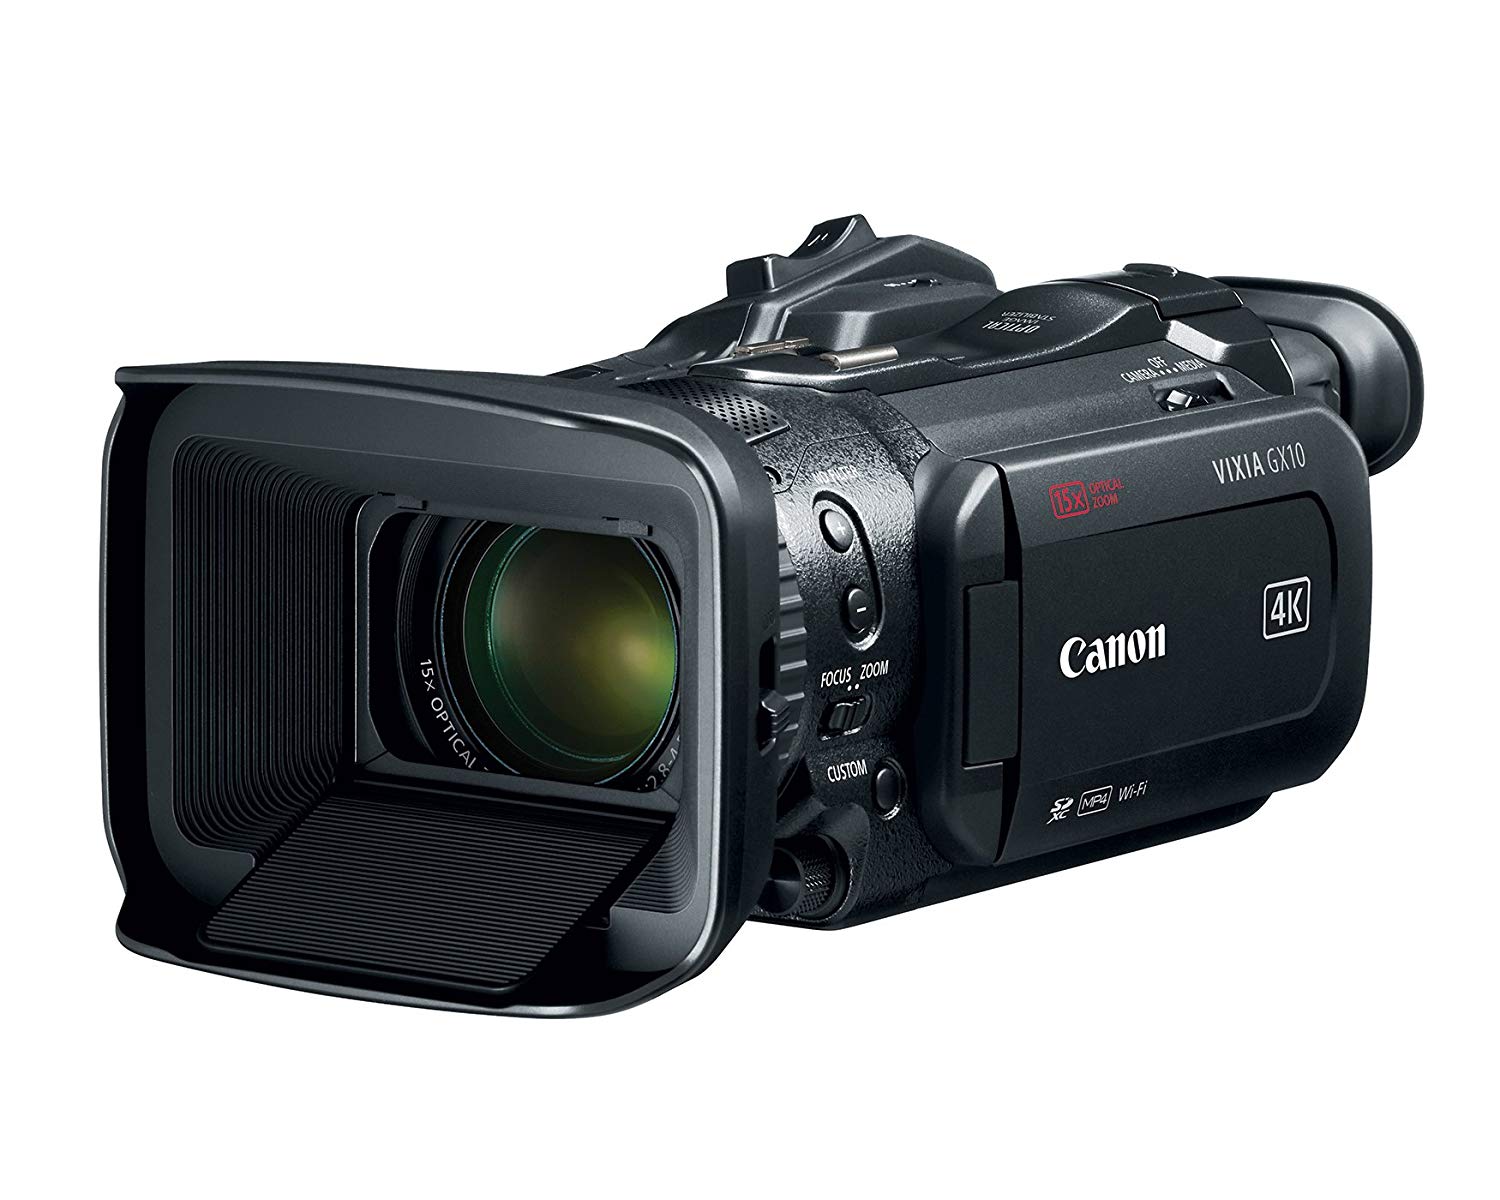 Canon Cyfrowa kamera wideo  Vixia GX10 z Wi-Fi 4K Ultra...